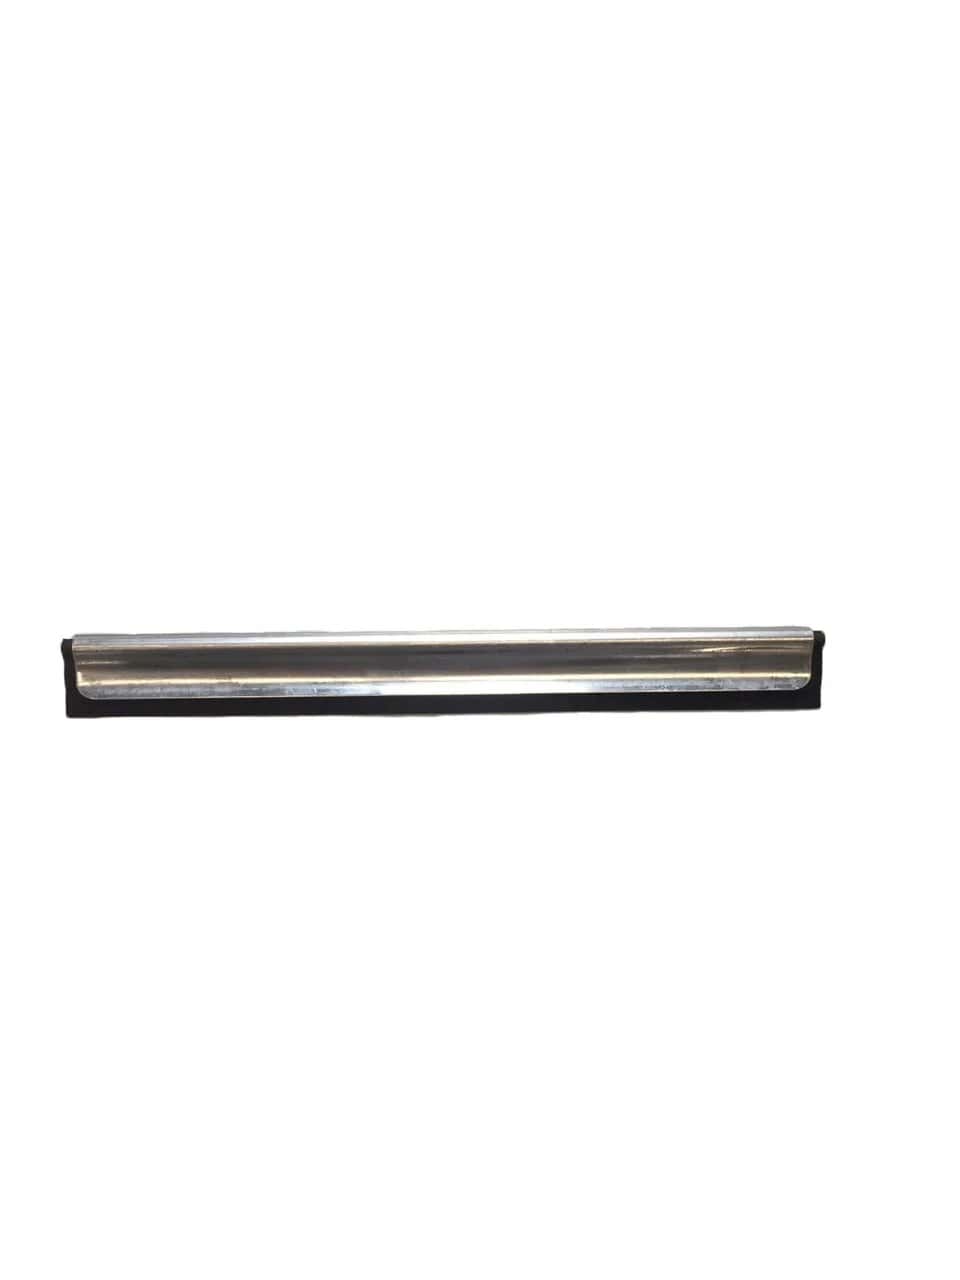 Профиль с сменной резинкой - CARIGHT 20cm stainless channel with rubber blade